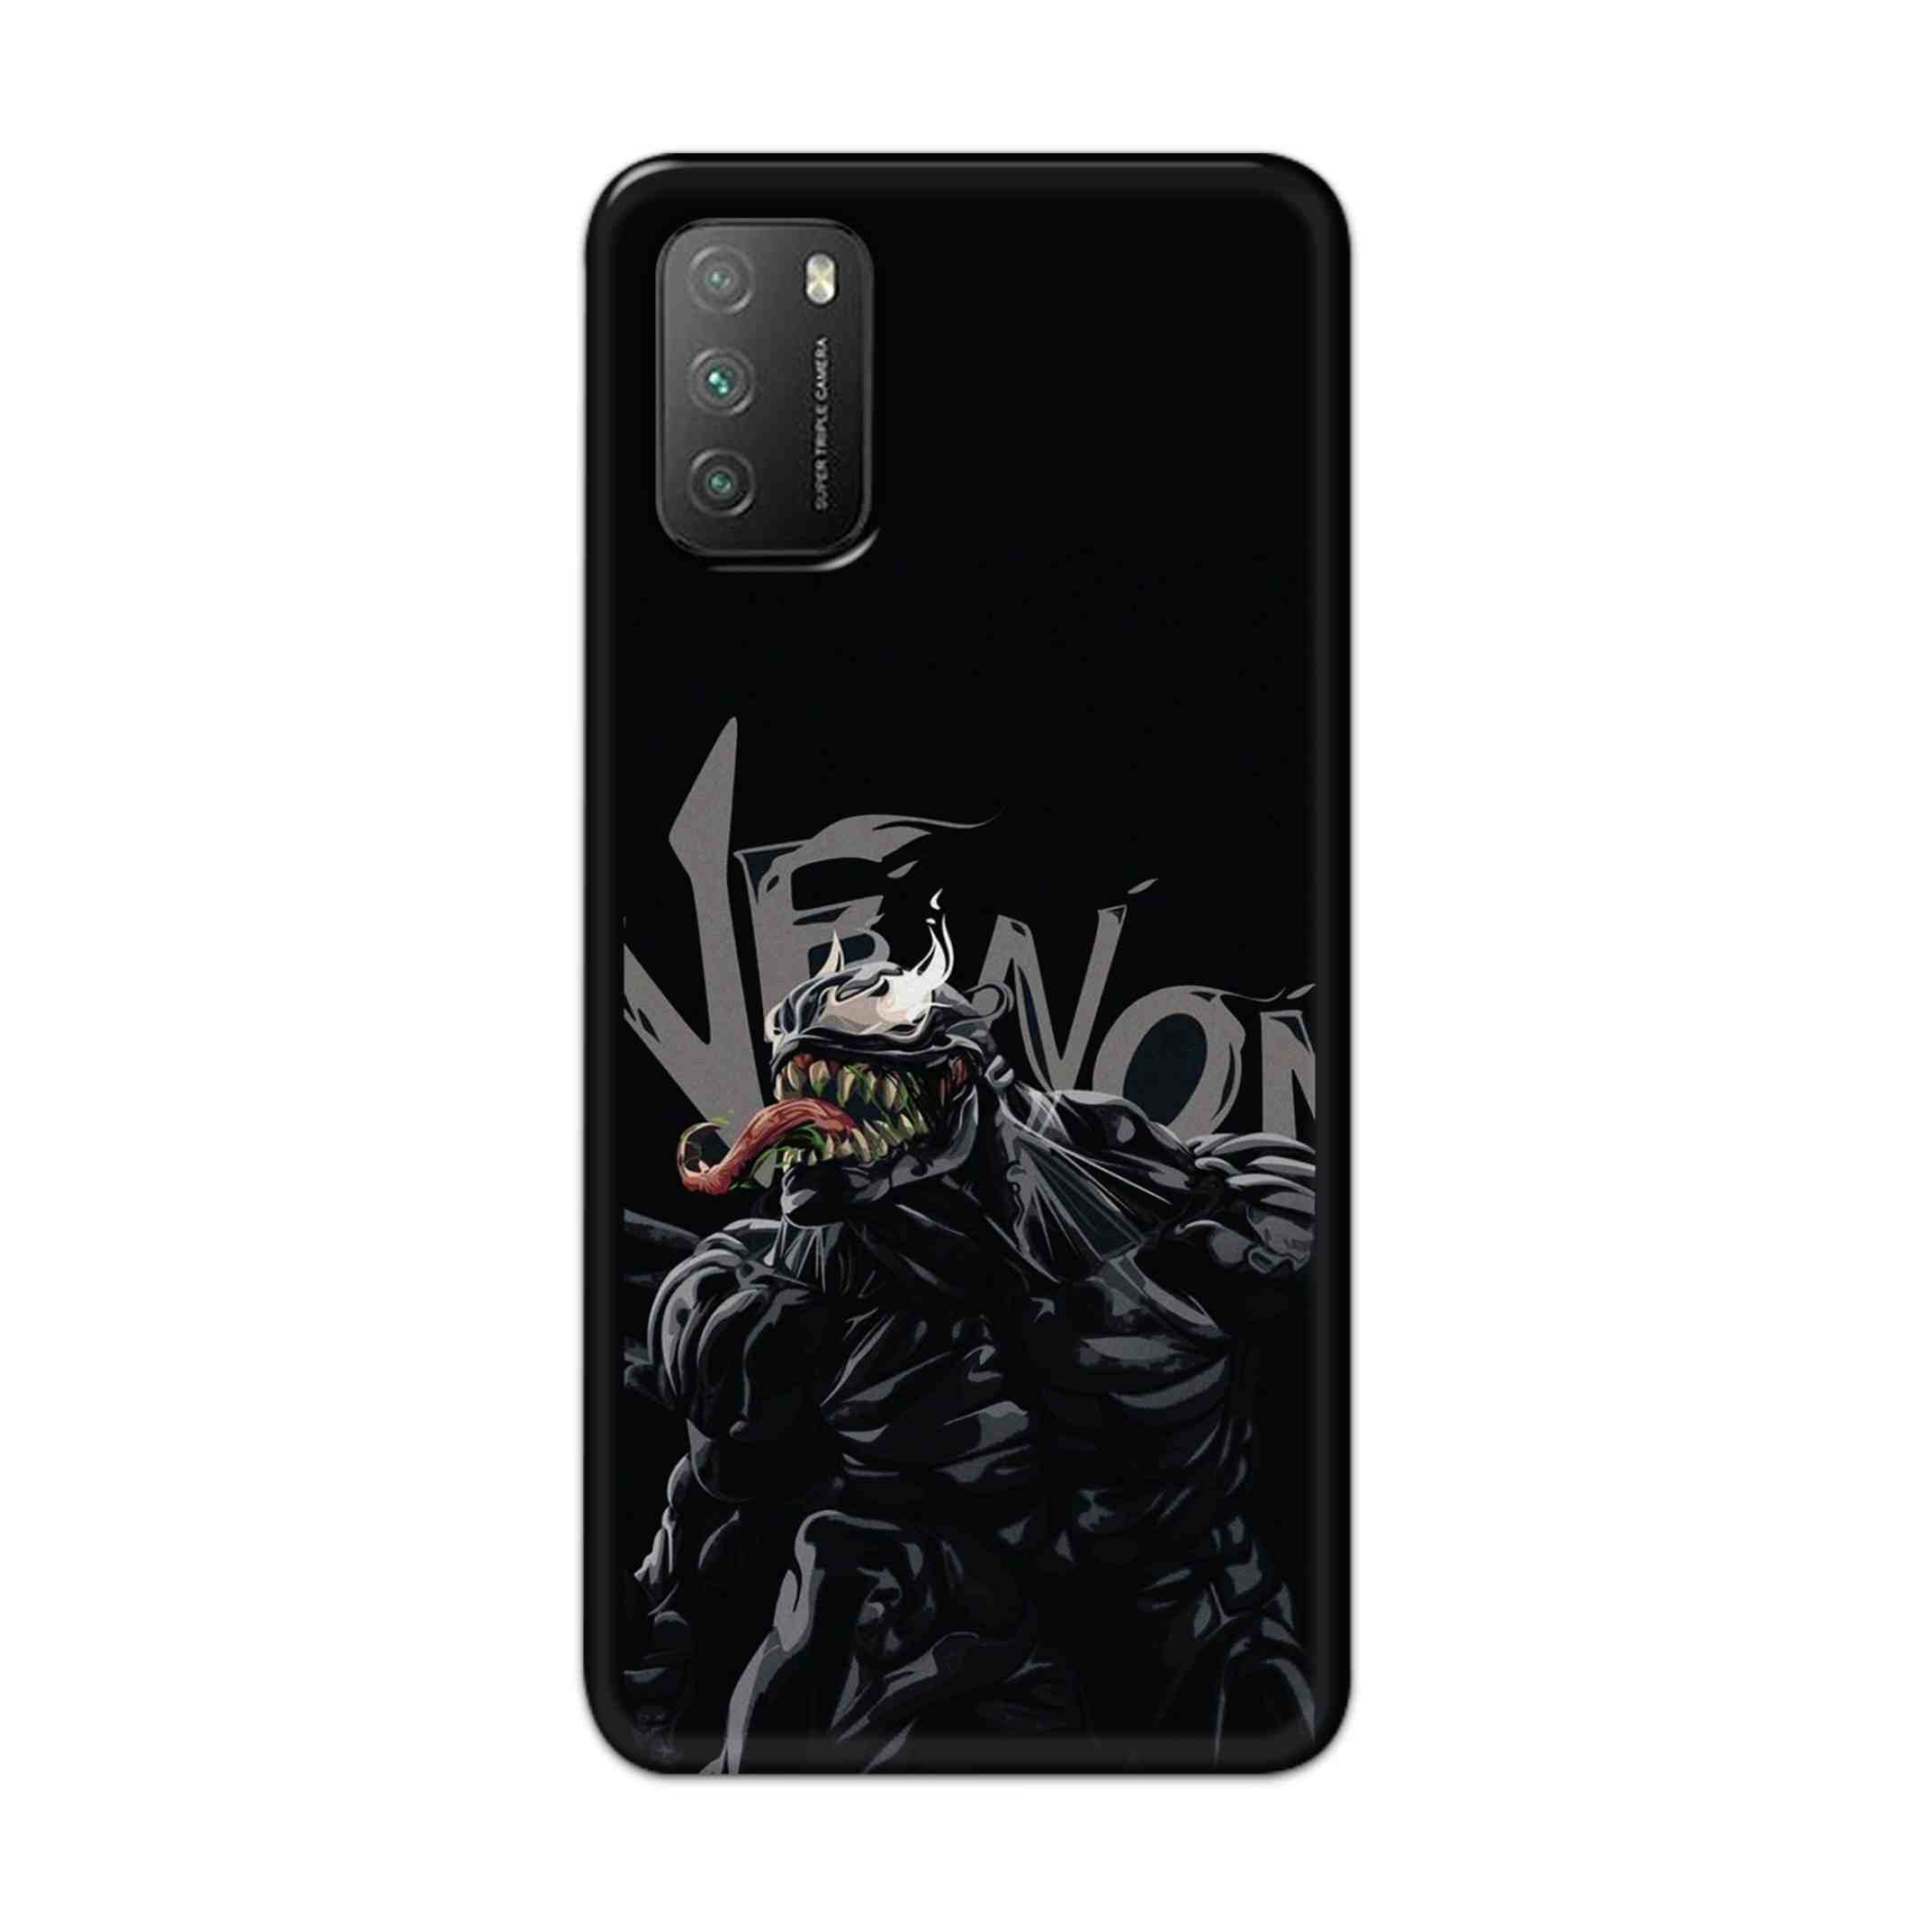 Buy  Venom Hard Back Mobile Phone Case Cover For Poco M3 Online